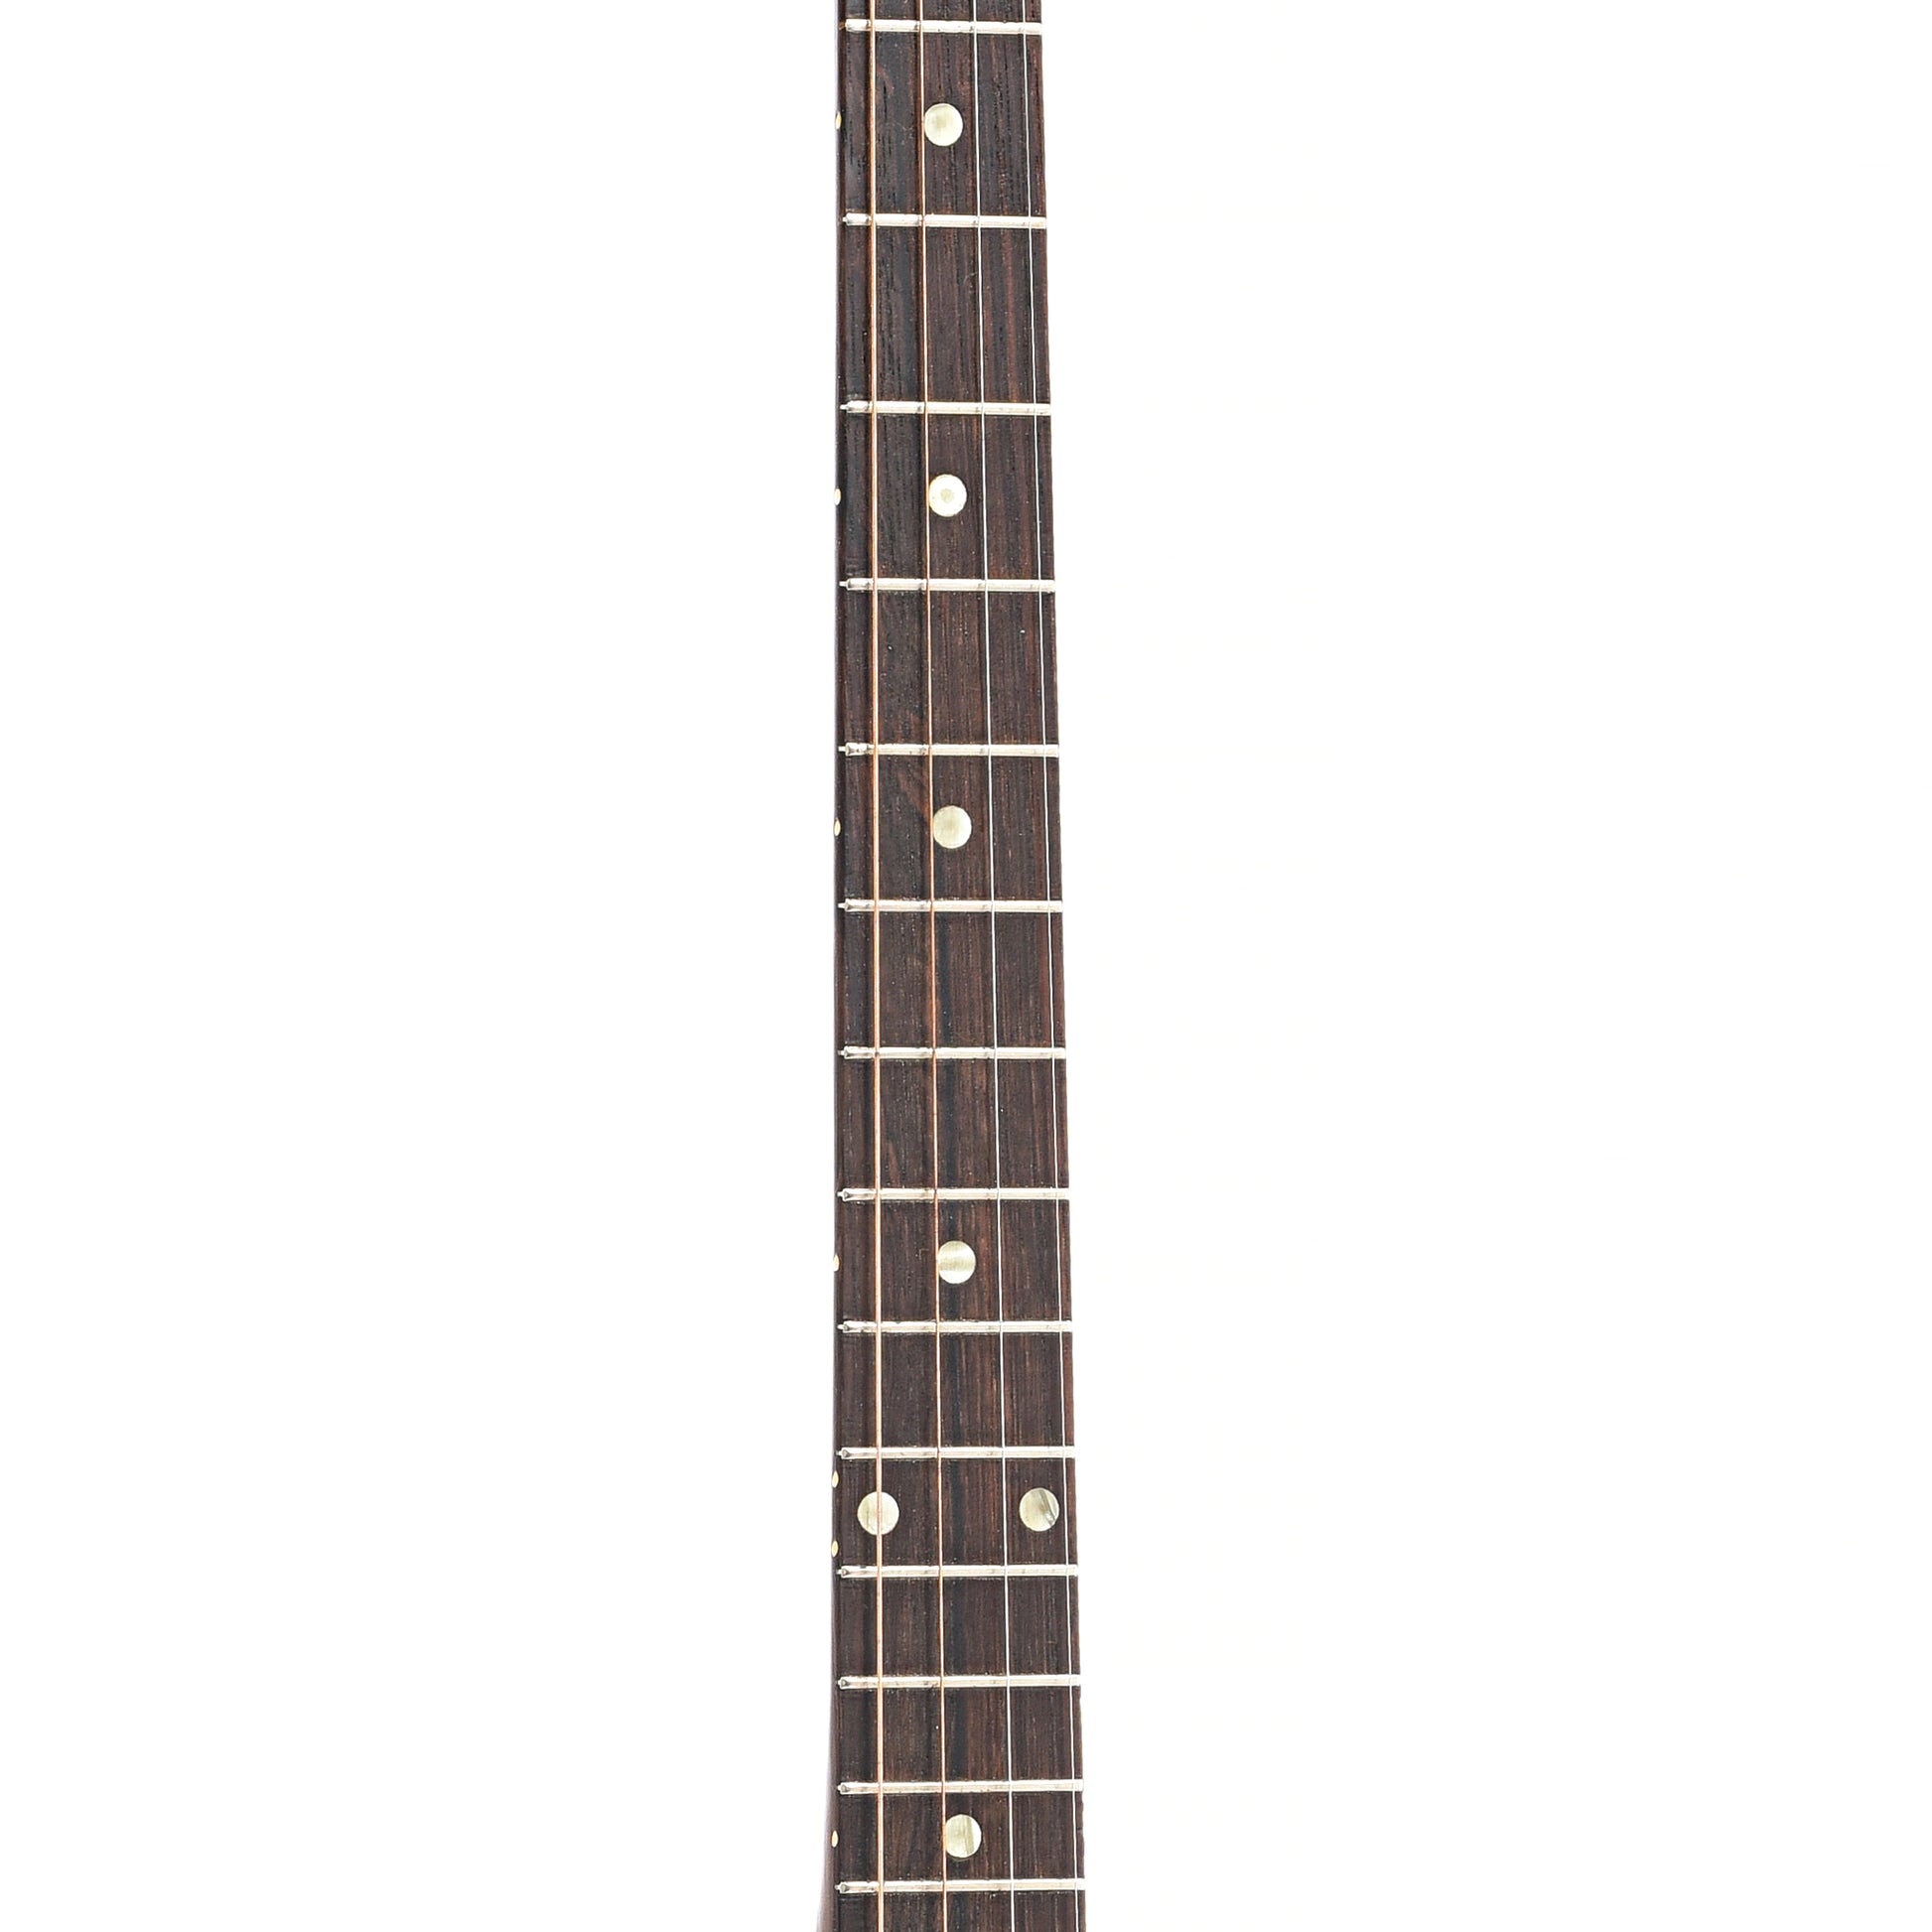 Fretboard of Gibson TB-100 Tenor Banjo (1956)